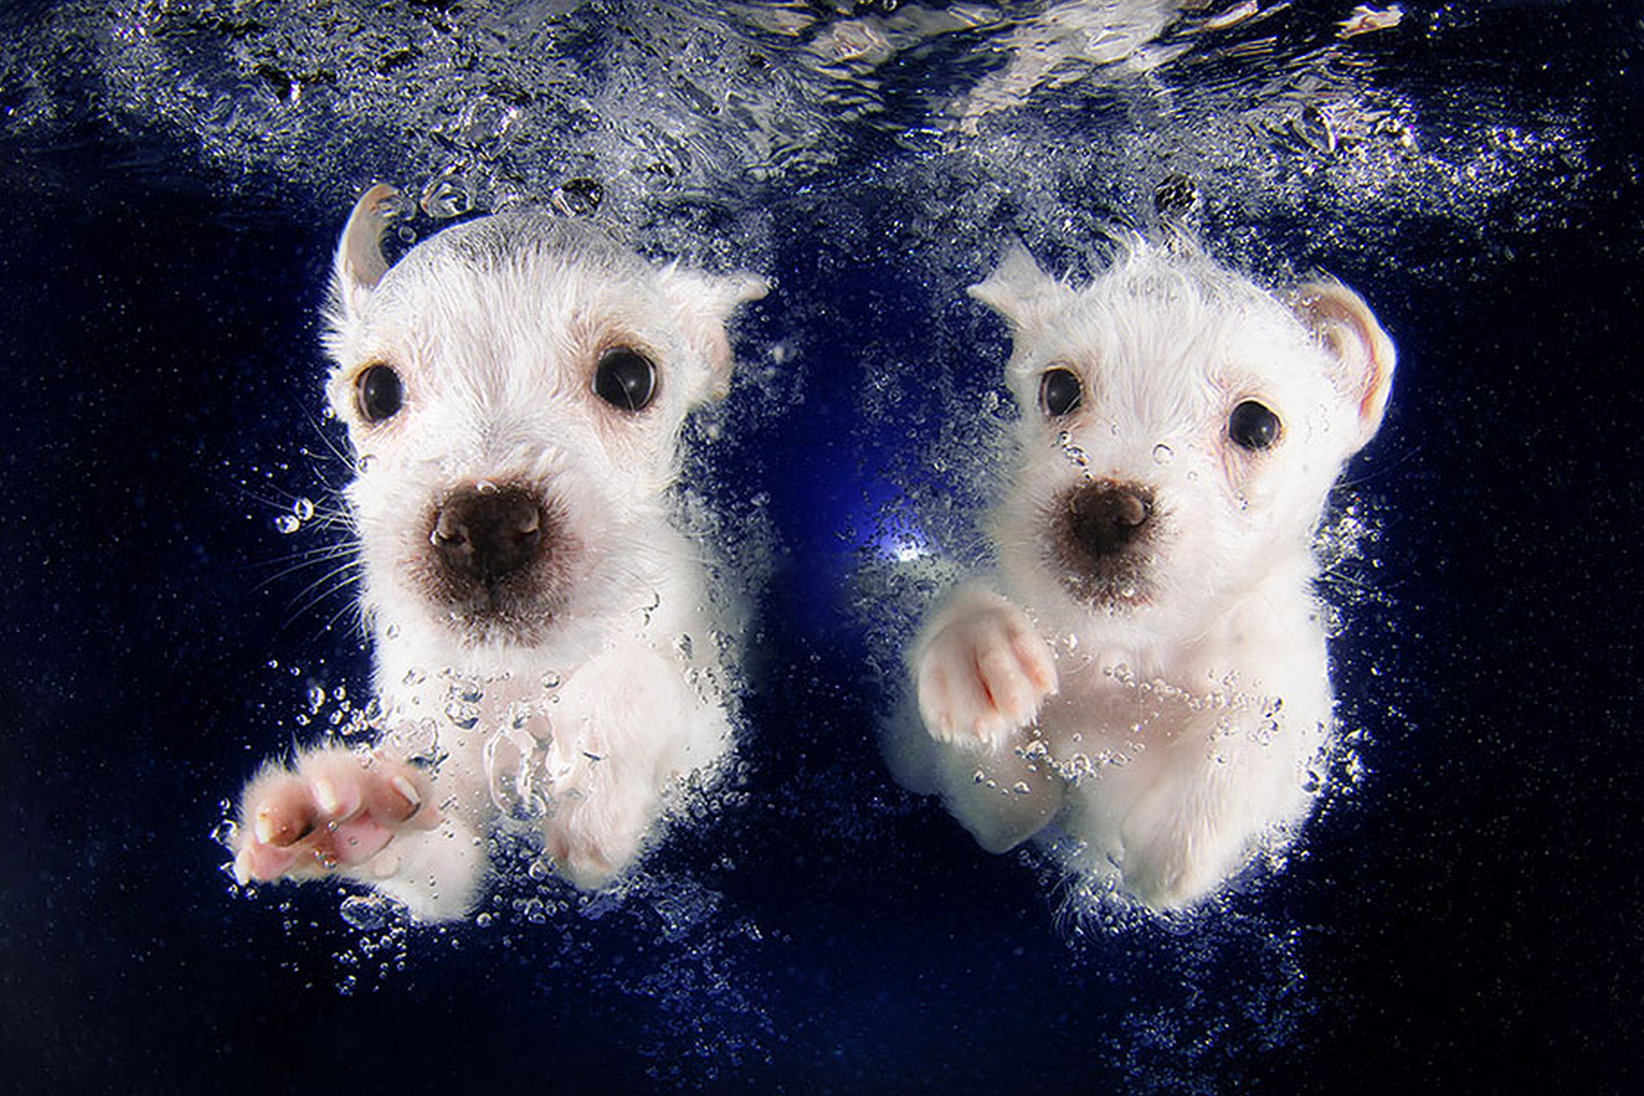 Dogs Underwater Wallpapers